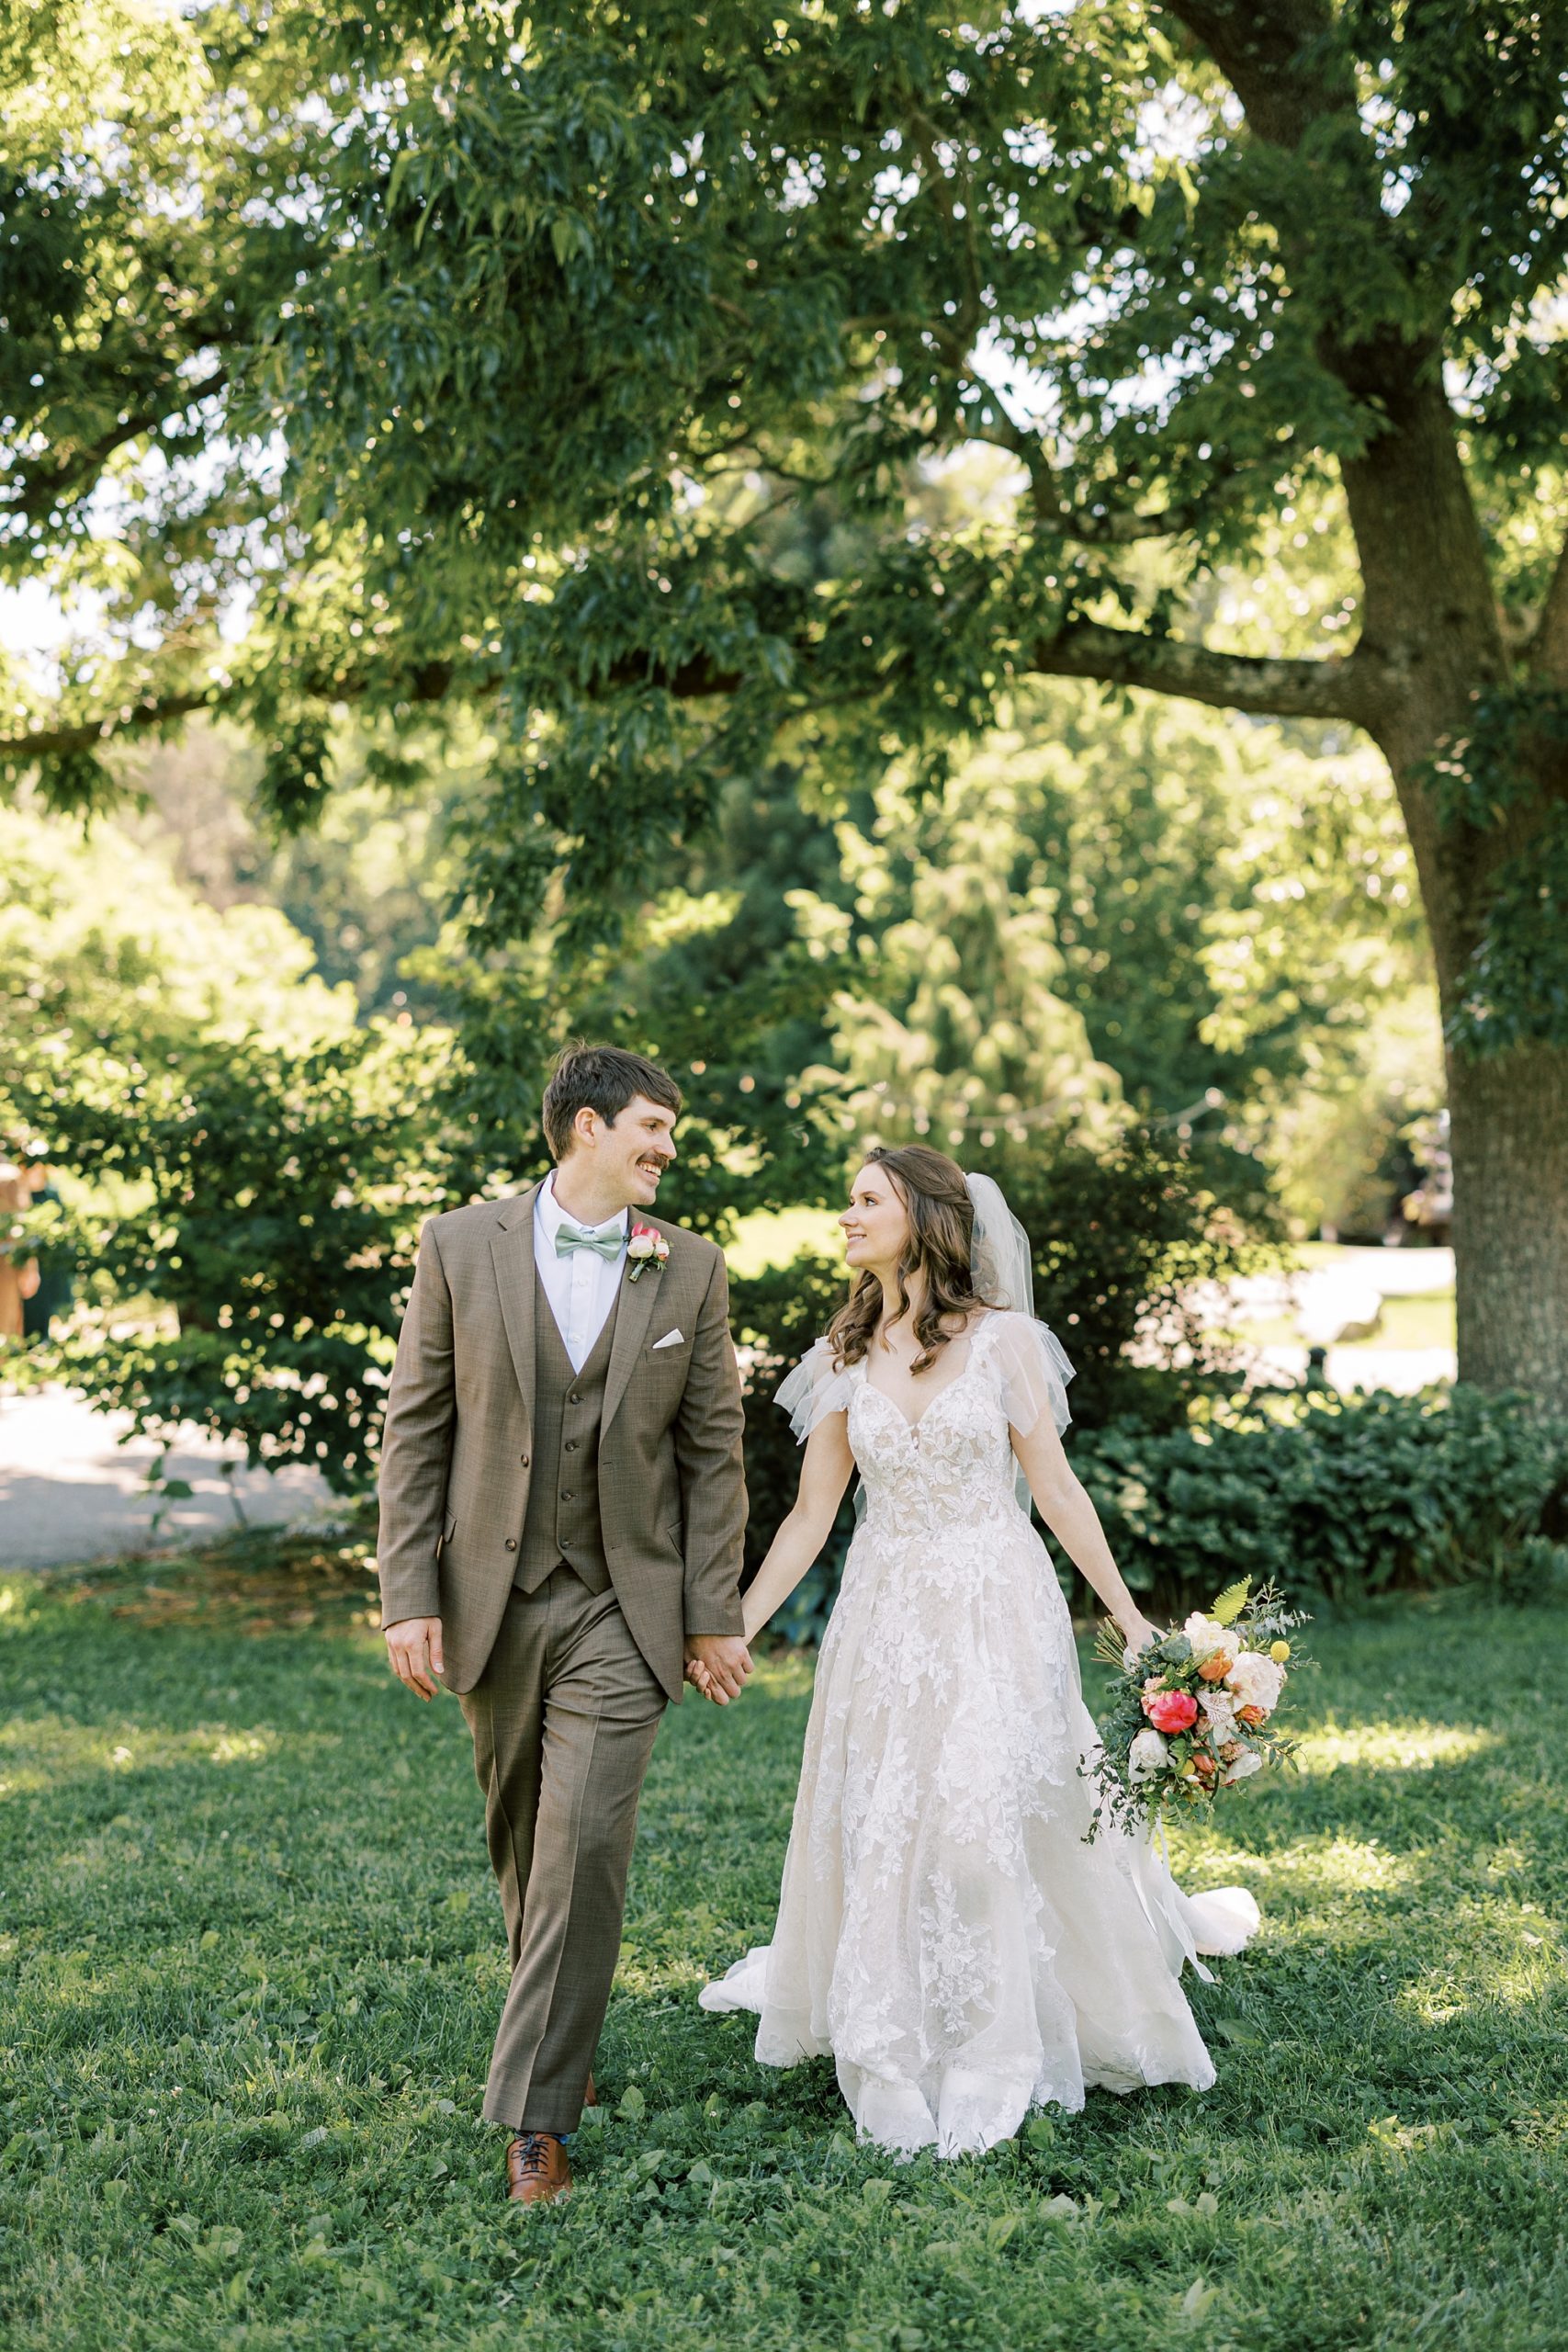 newlyweds hold hands walking through Tyler Arboretum during summer wedding day